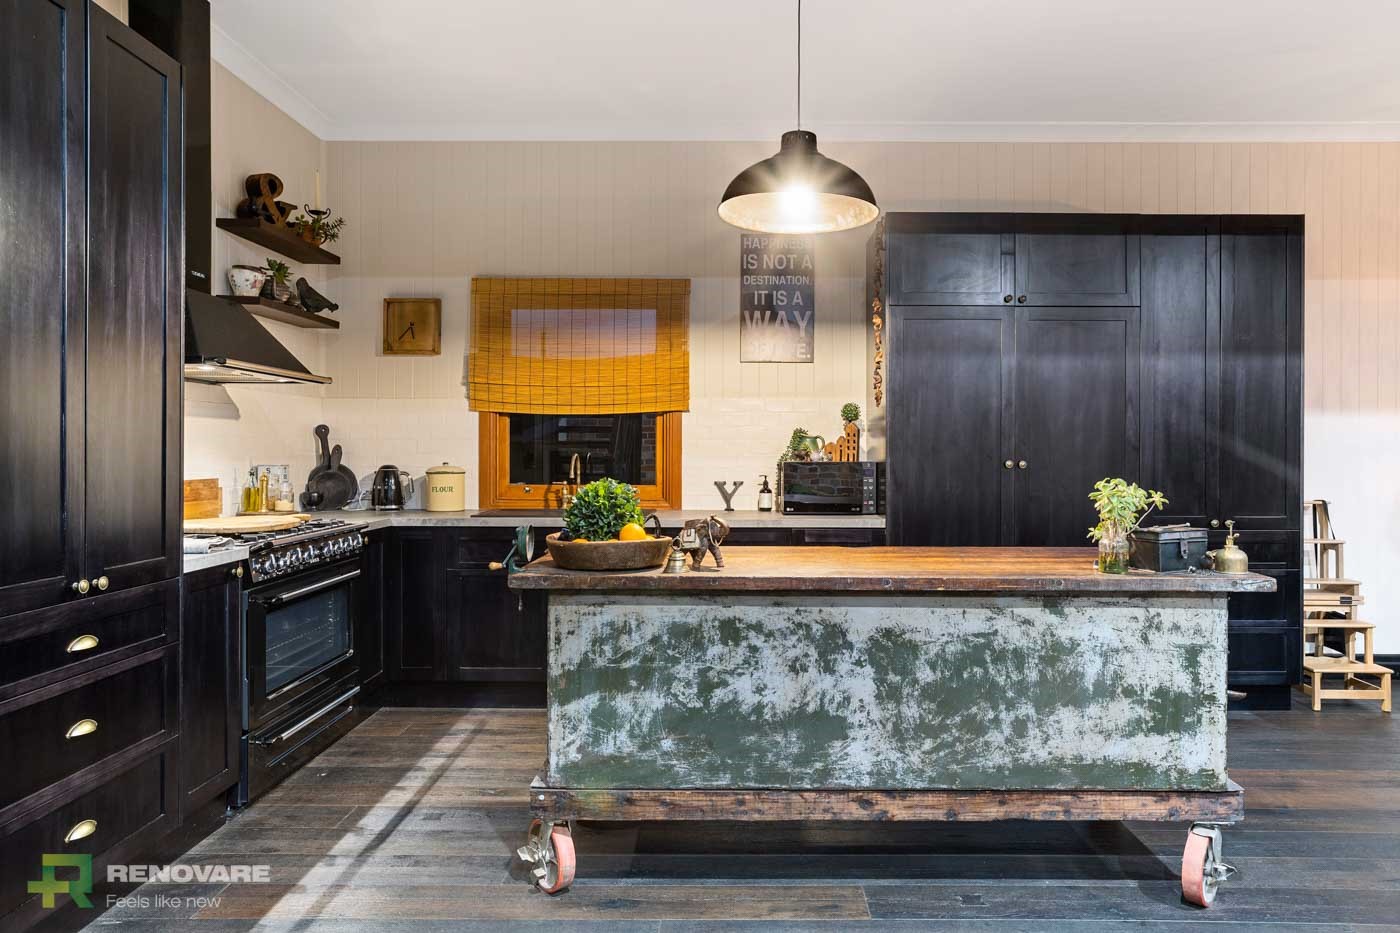 Vintage style kitchen | Renovare’s Best Home Renovations blog